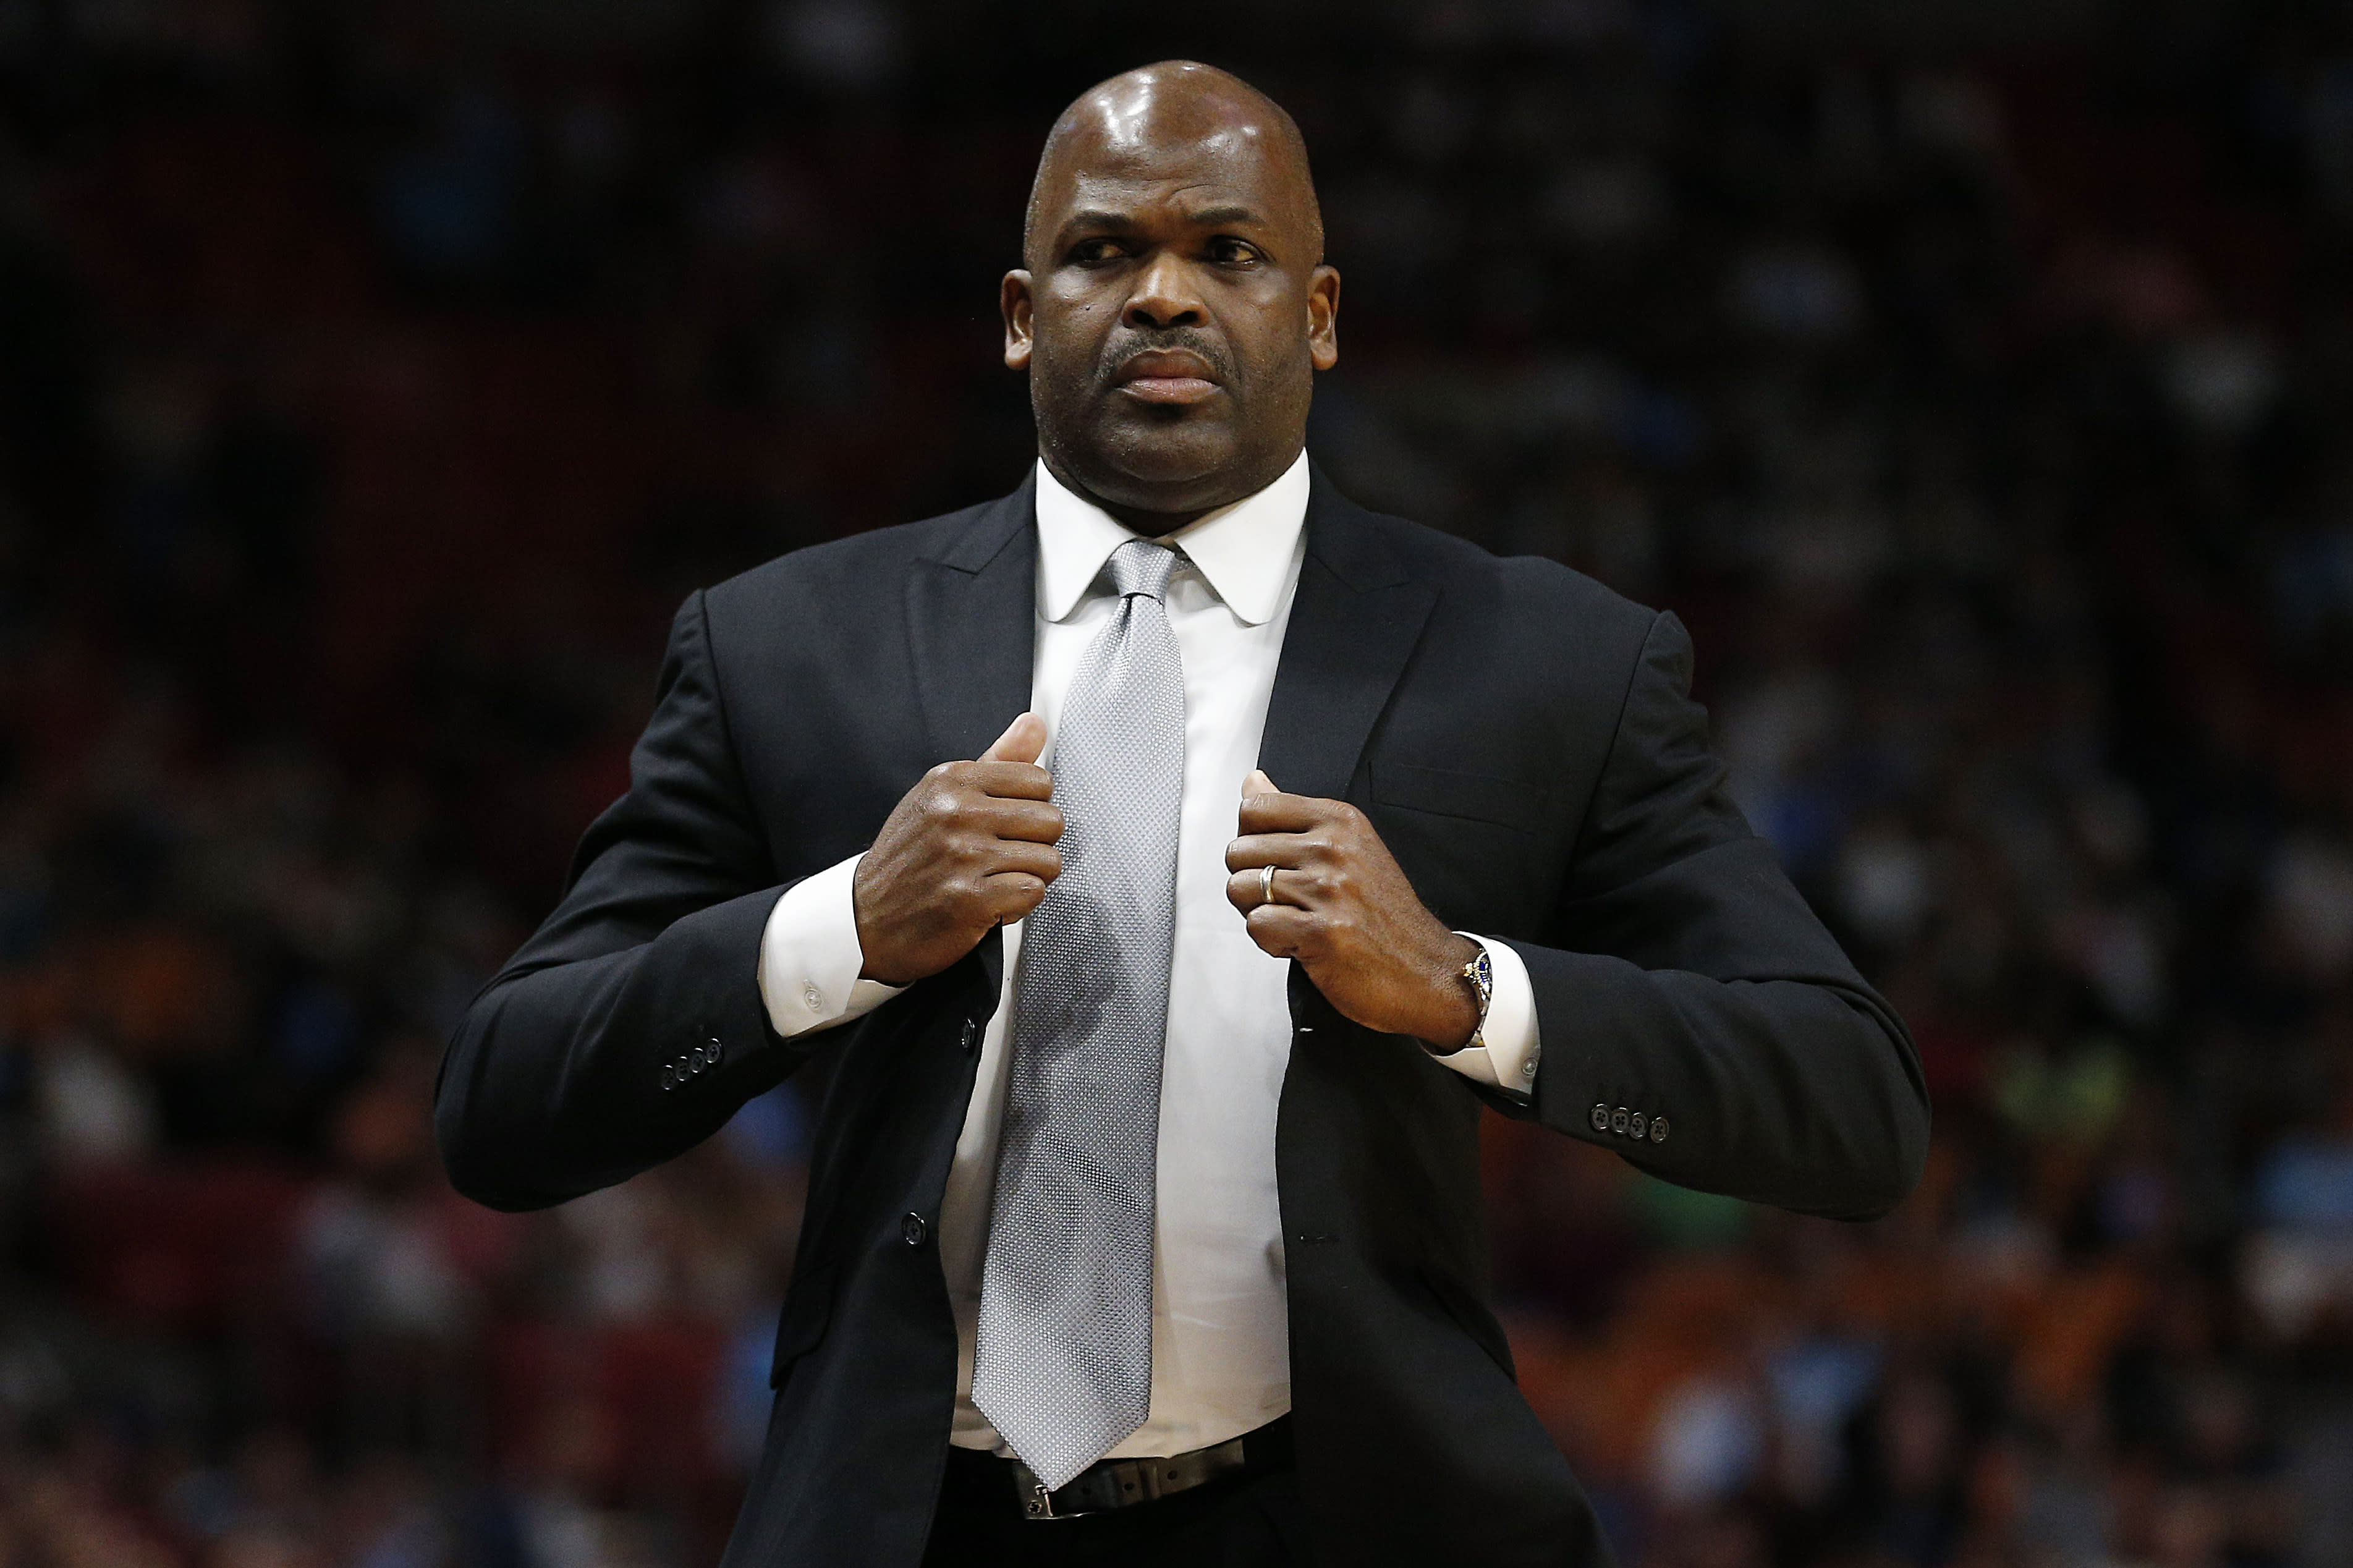 NBA Black coaches dwindling